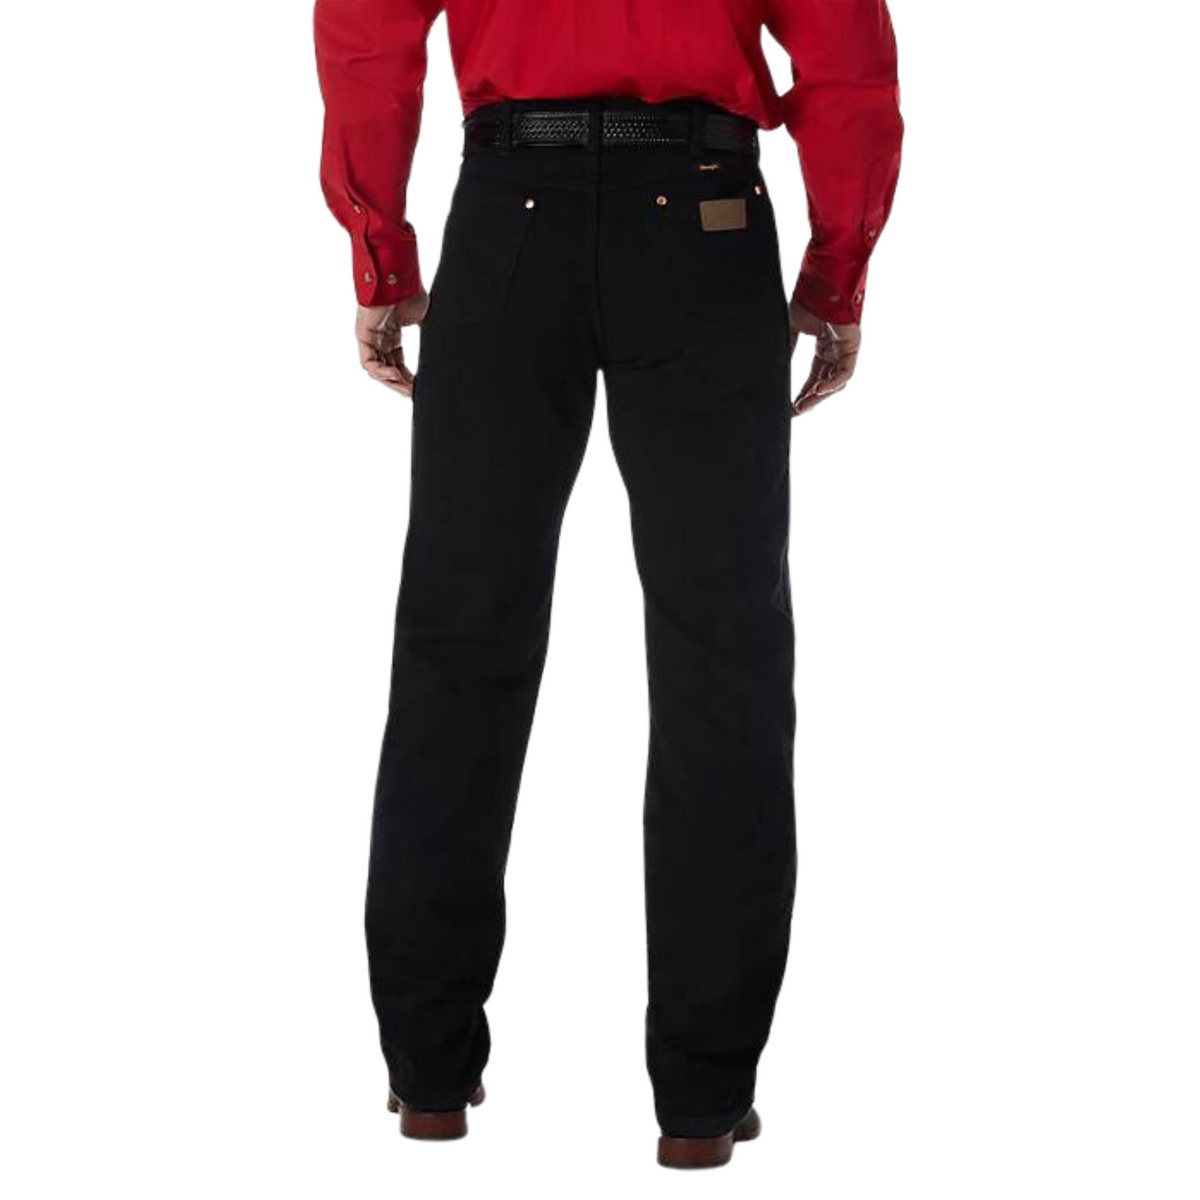 Men's Wrangler Cowboy Cut Original Fit Black Jeans